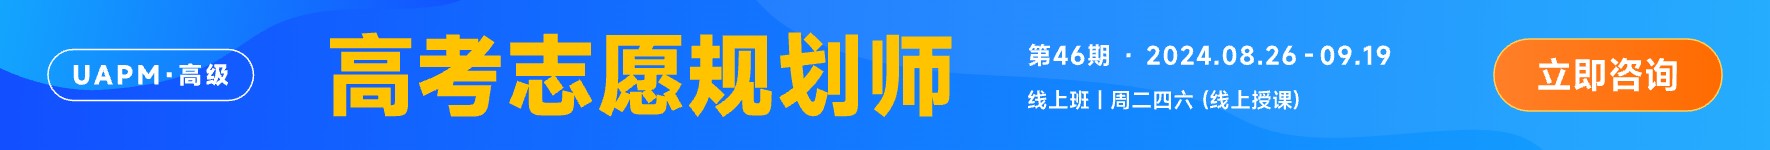 CN-动态资讯-资讯报道